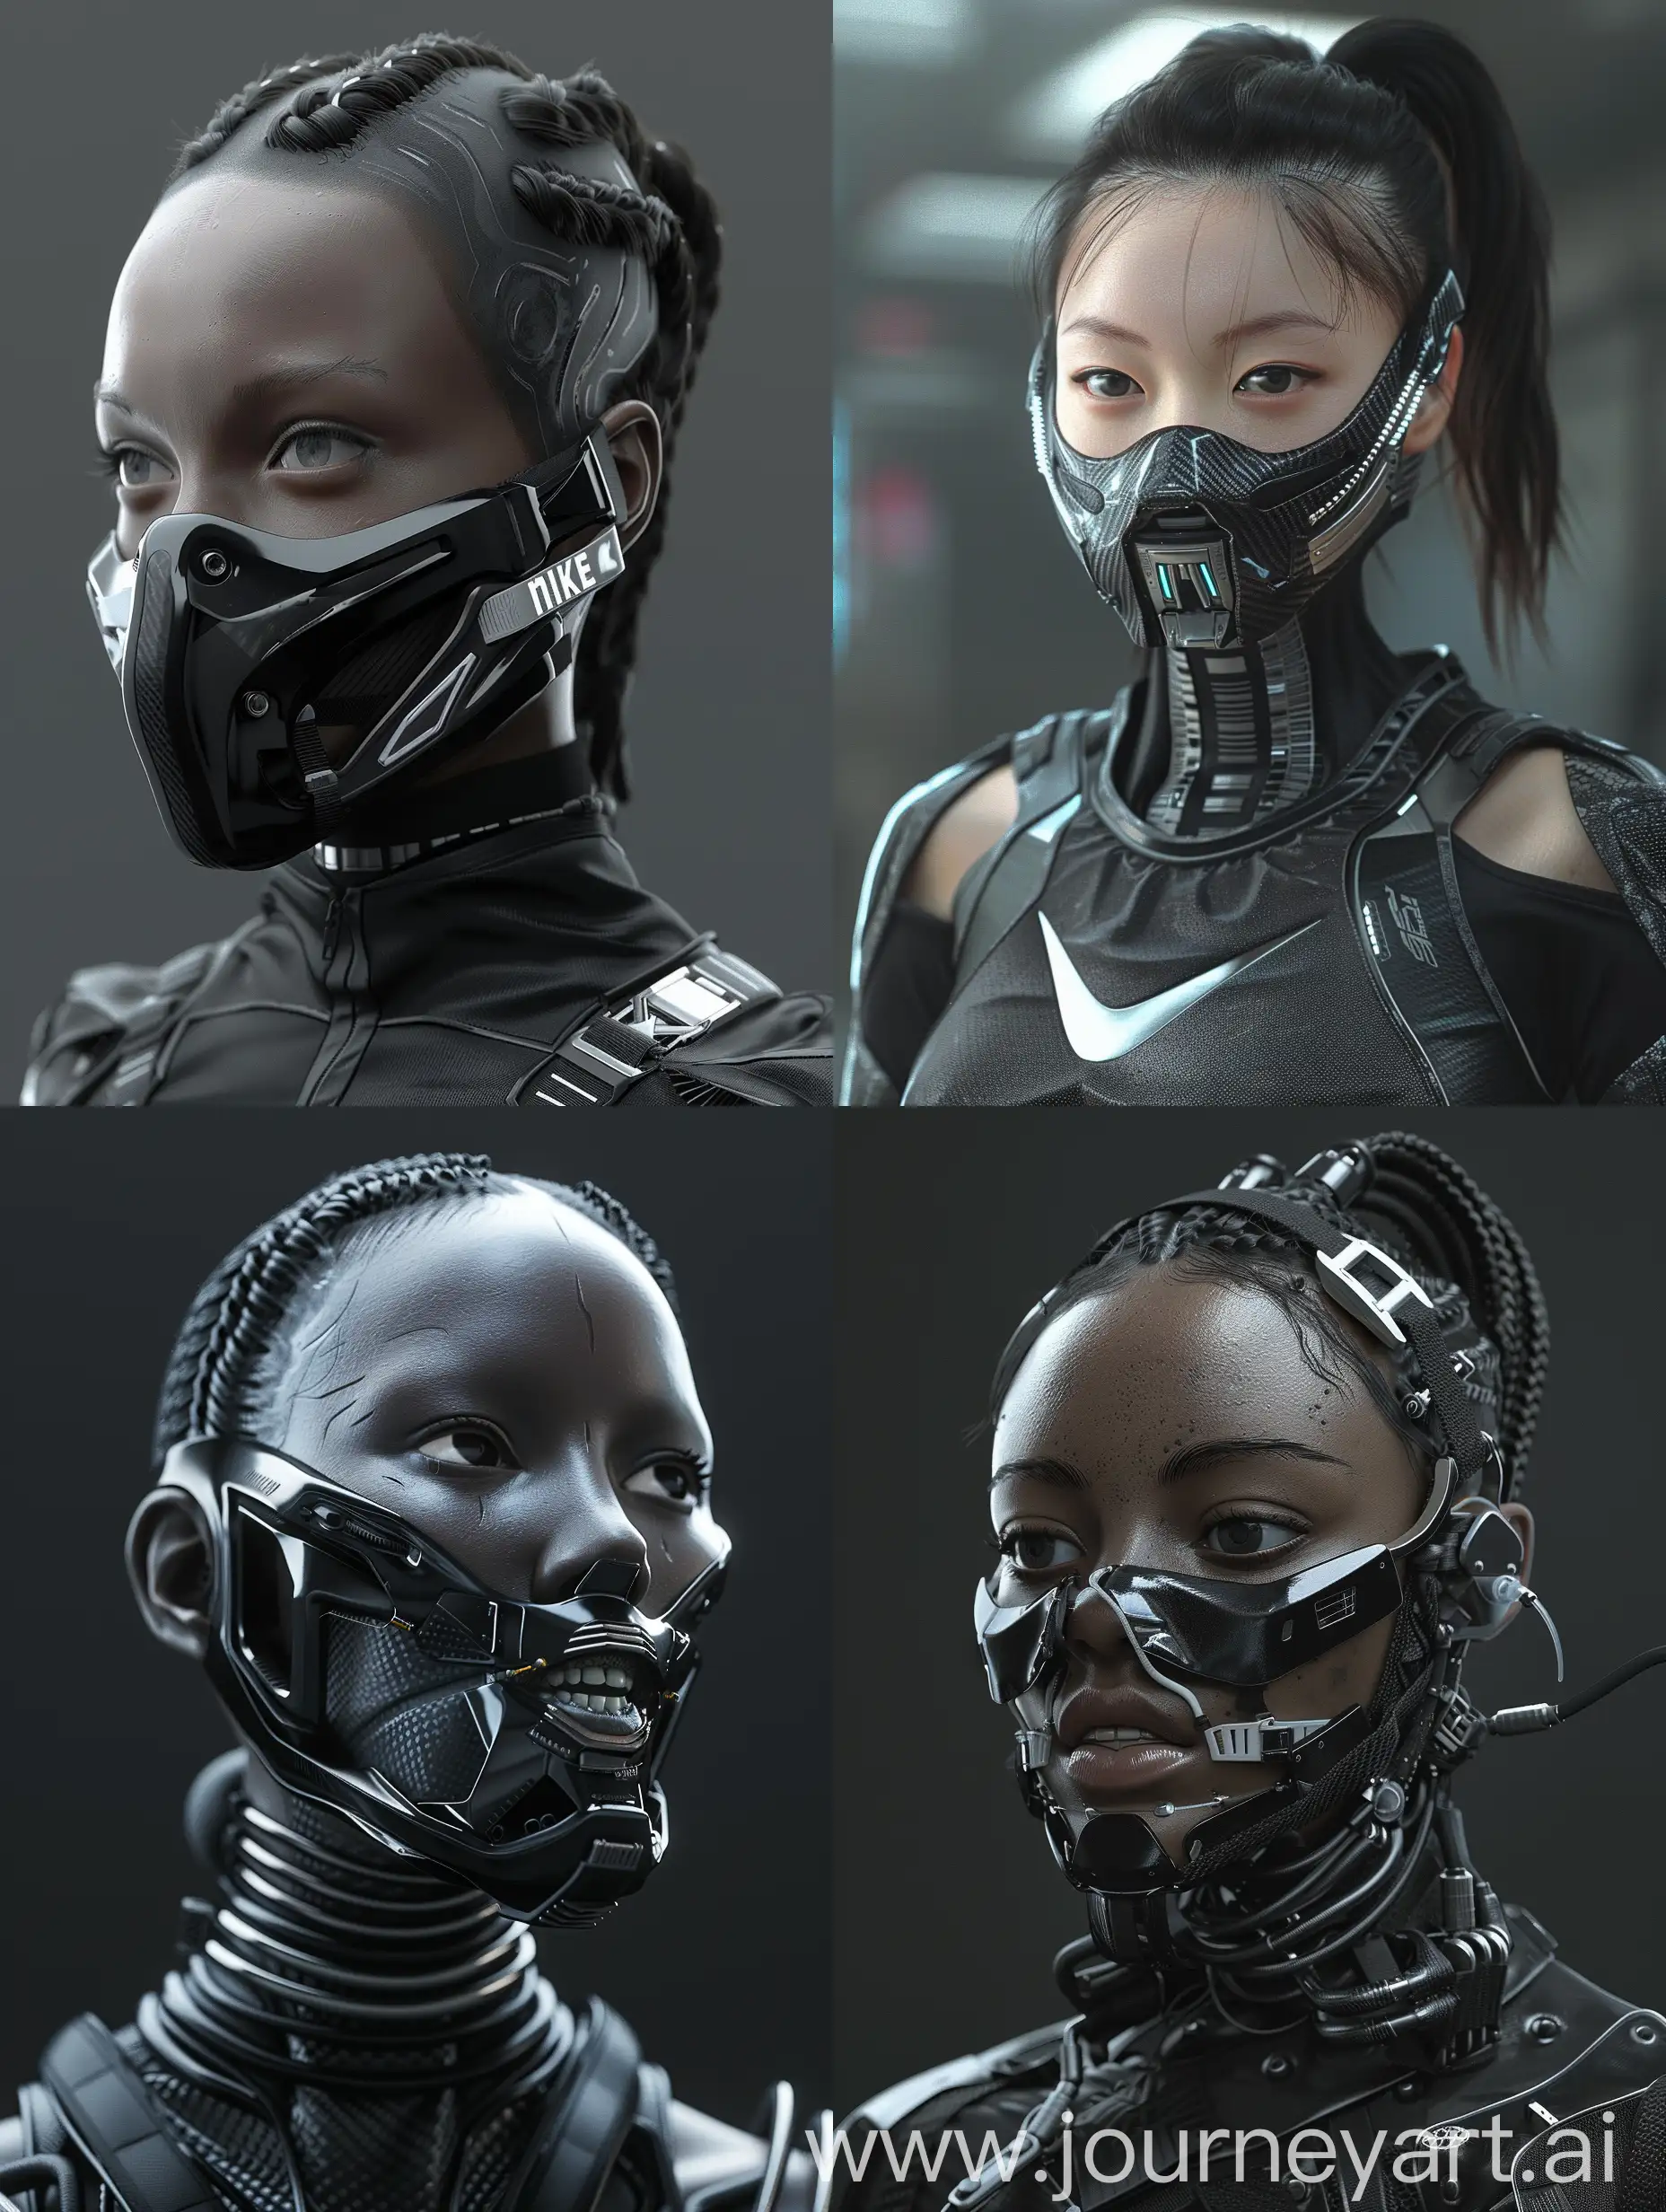 Futuristic-Cyberpunk-Character-with-Advanced-Cybernetic-Mask-and-Nike-Addons